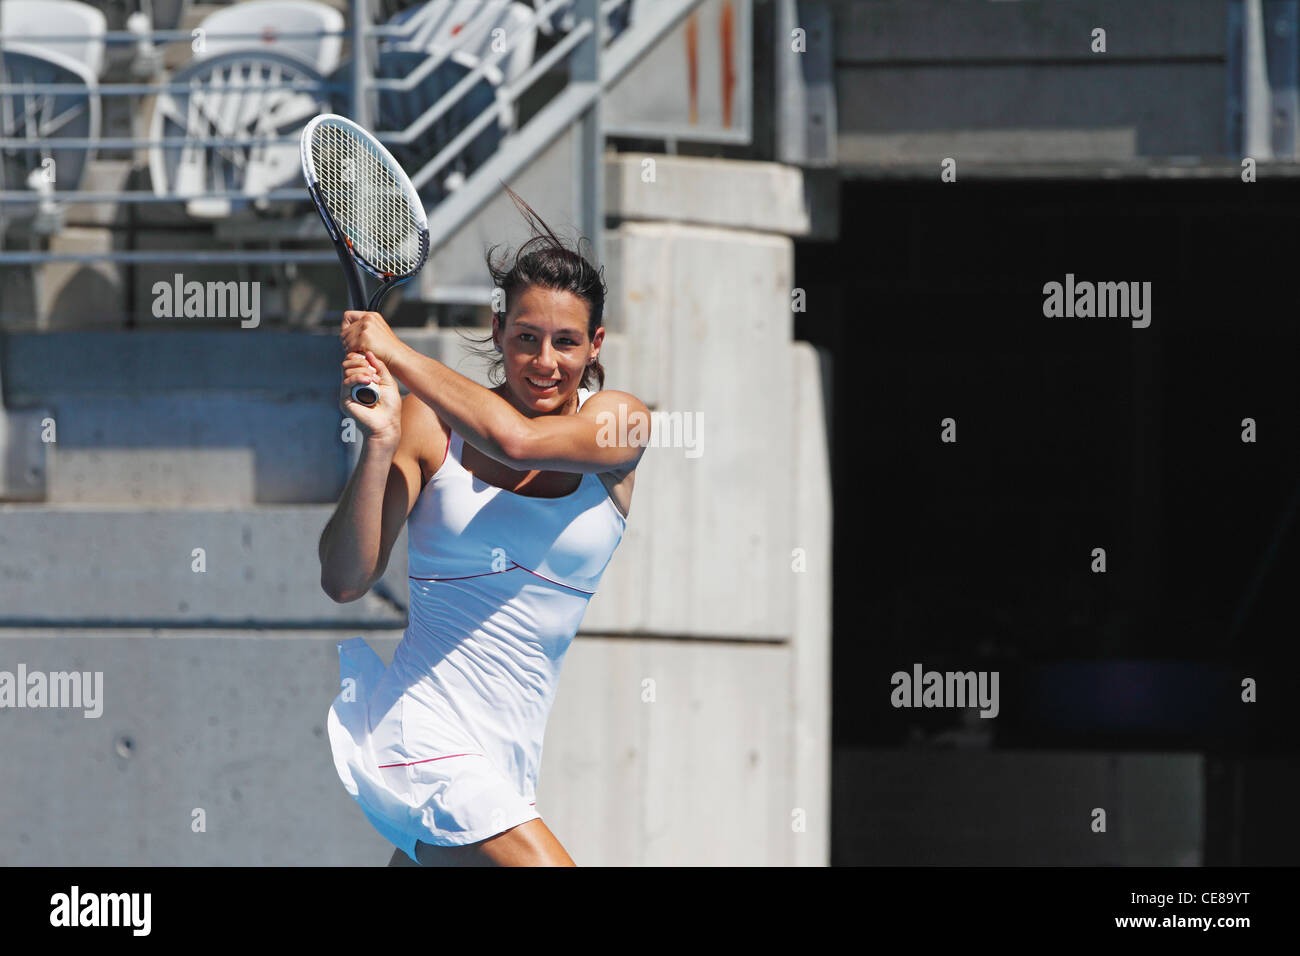 Joven Jugador de tenis femenino Foto de stock